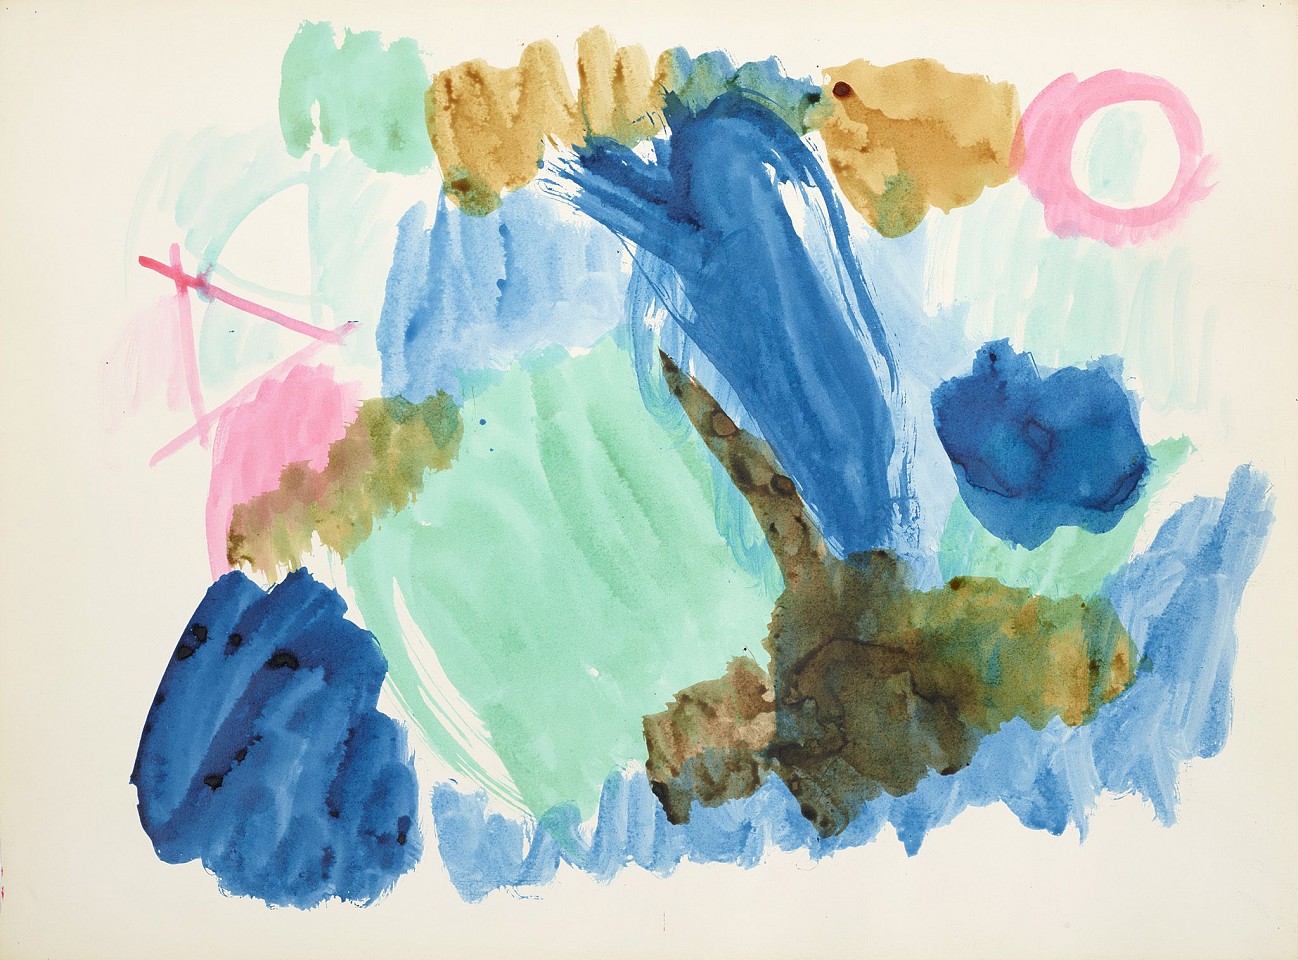 Ethel Schwabacher, Untitled, c. 1960-62
Colored ink on paper, 22 1/4 x 30 in. (56.5 x 76.2 cm)
SCHW-00098